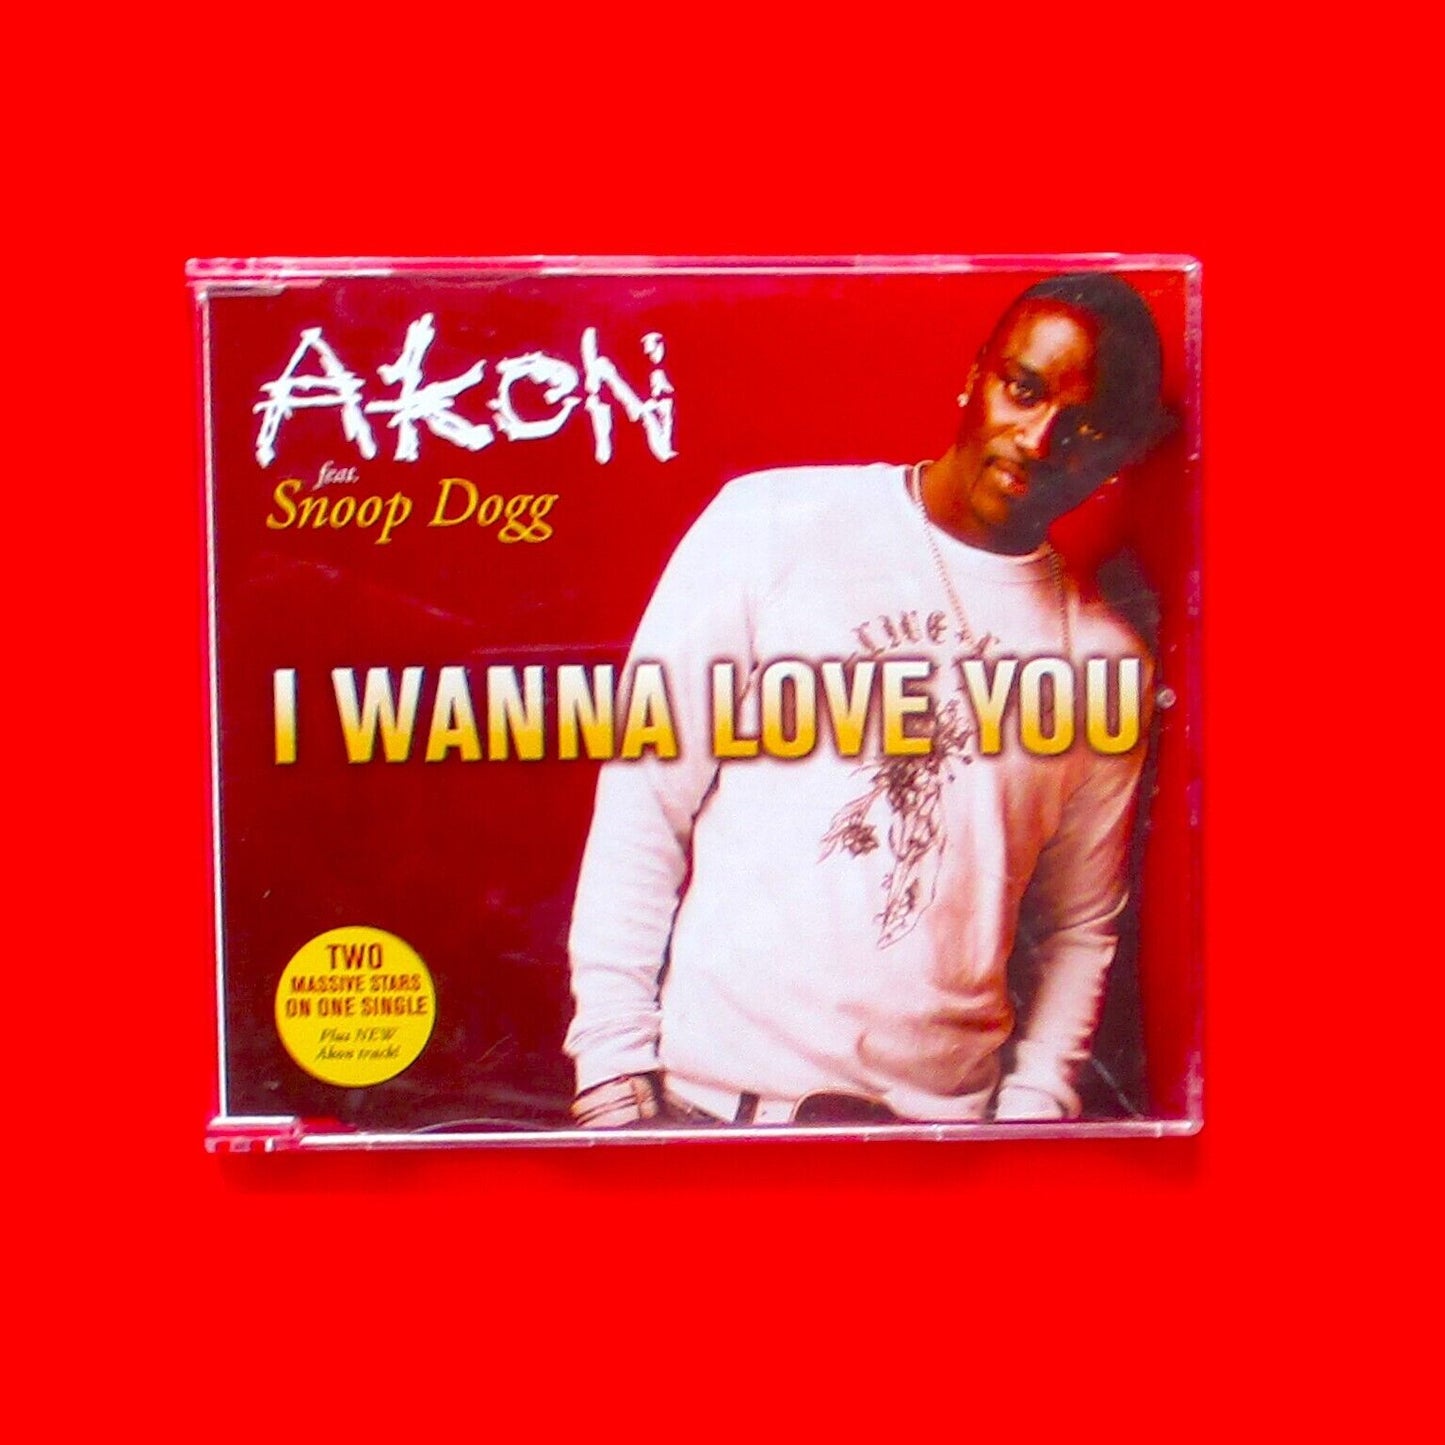 Akon Snoop Dogg I Wanna Love You 2007 CD Single Island Records UK